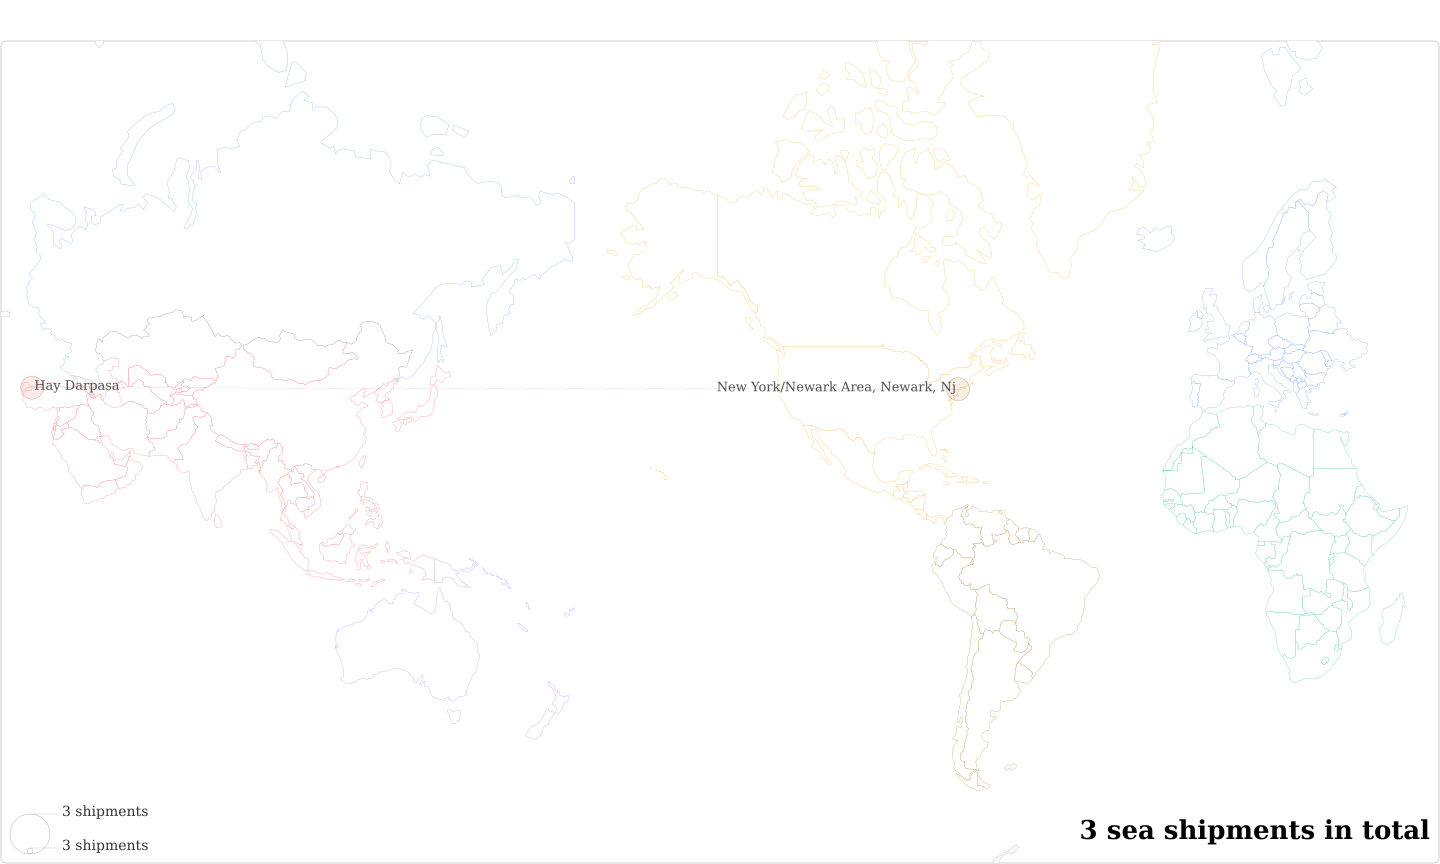 Reksoil Petrokimya San Ve Tic B's Imports Per Country Map